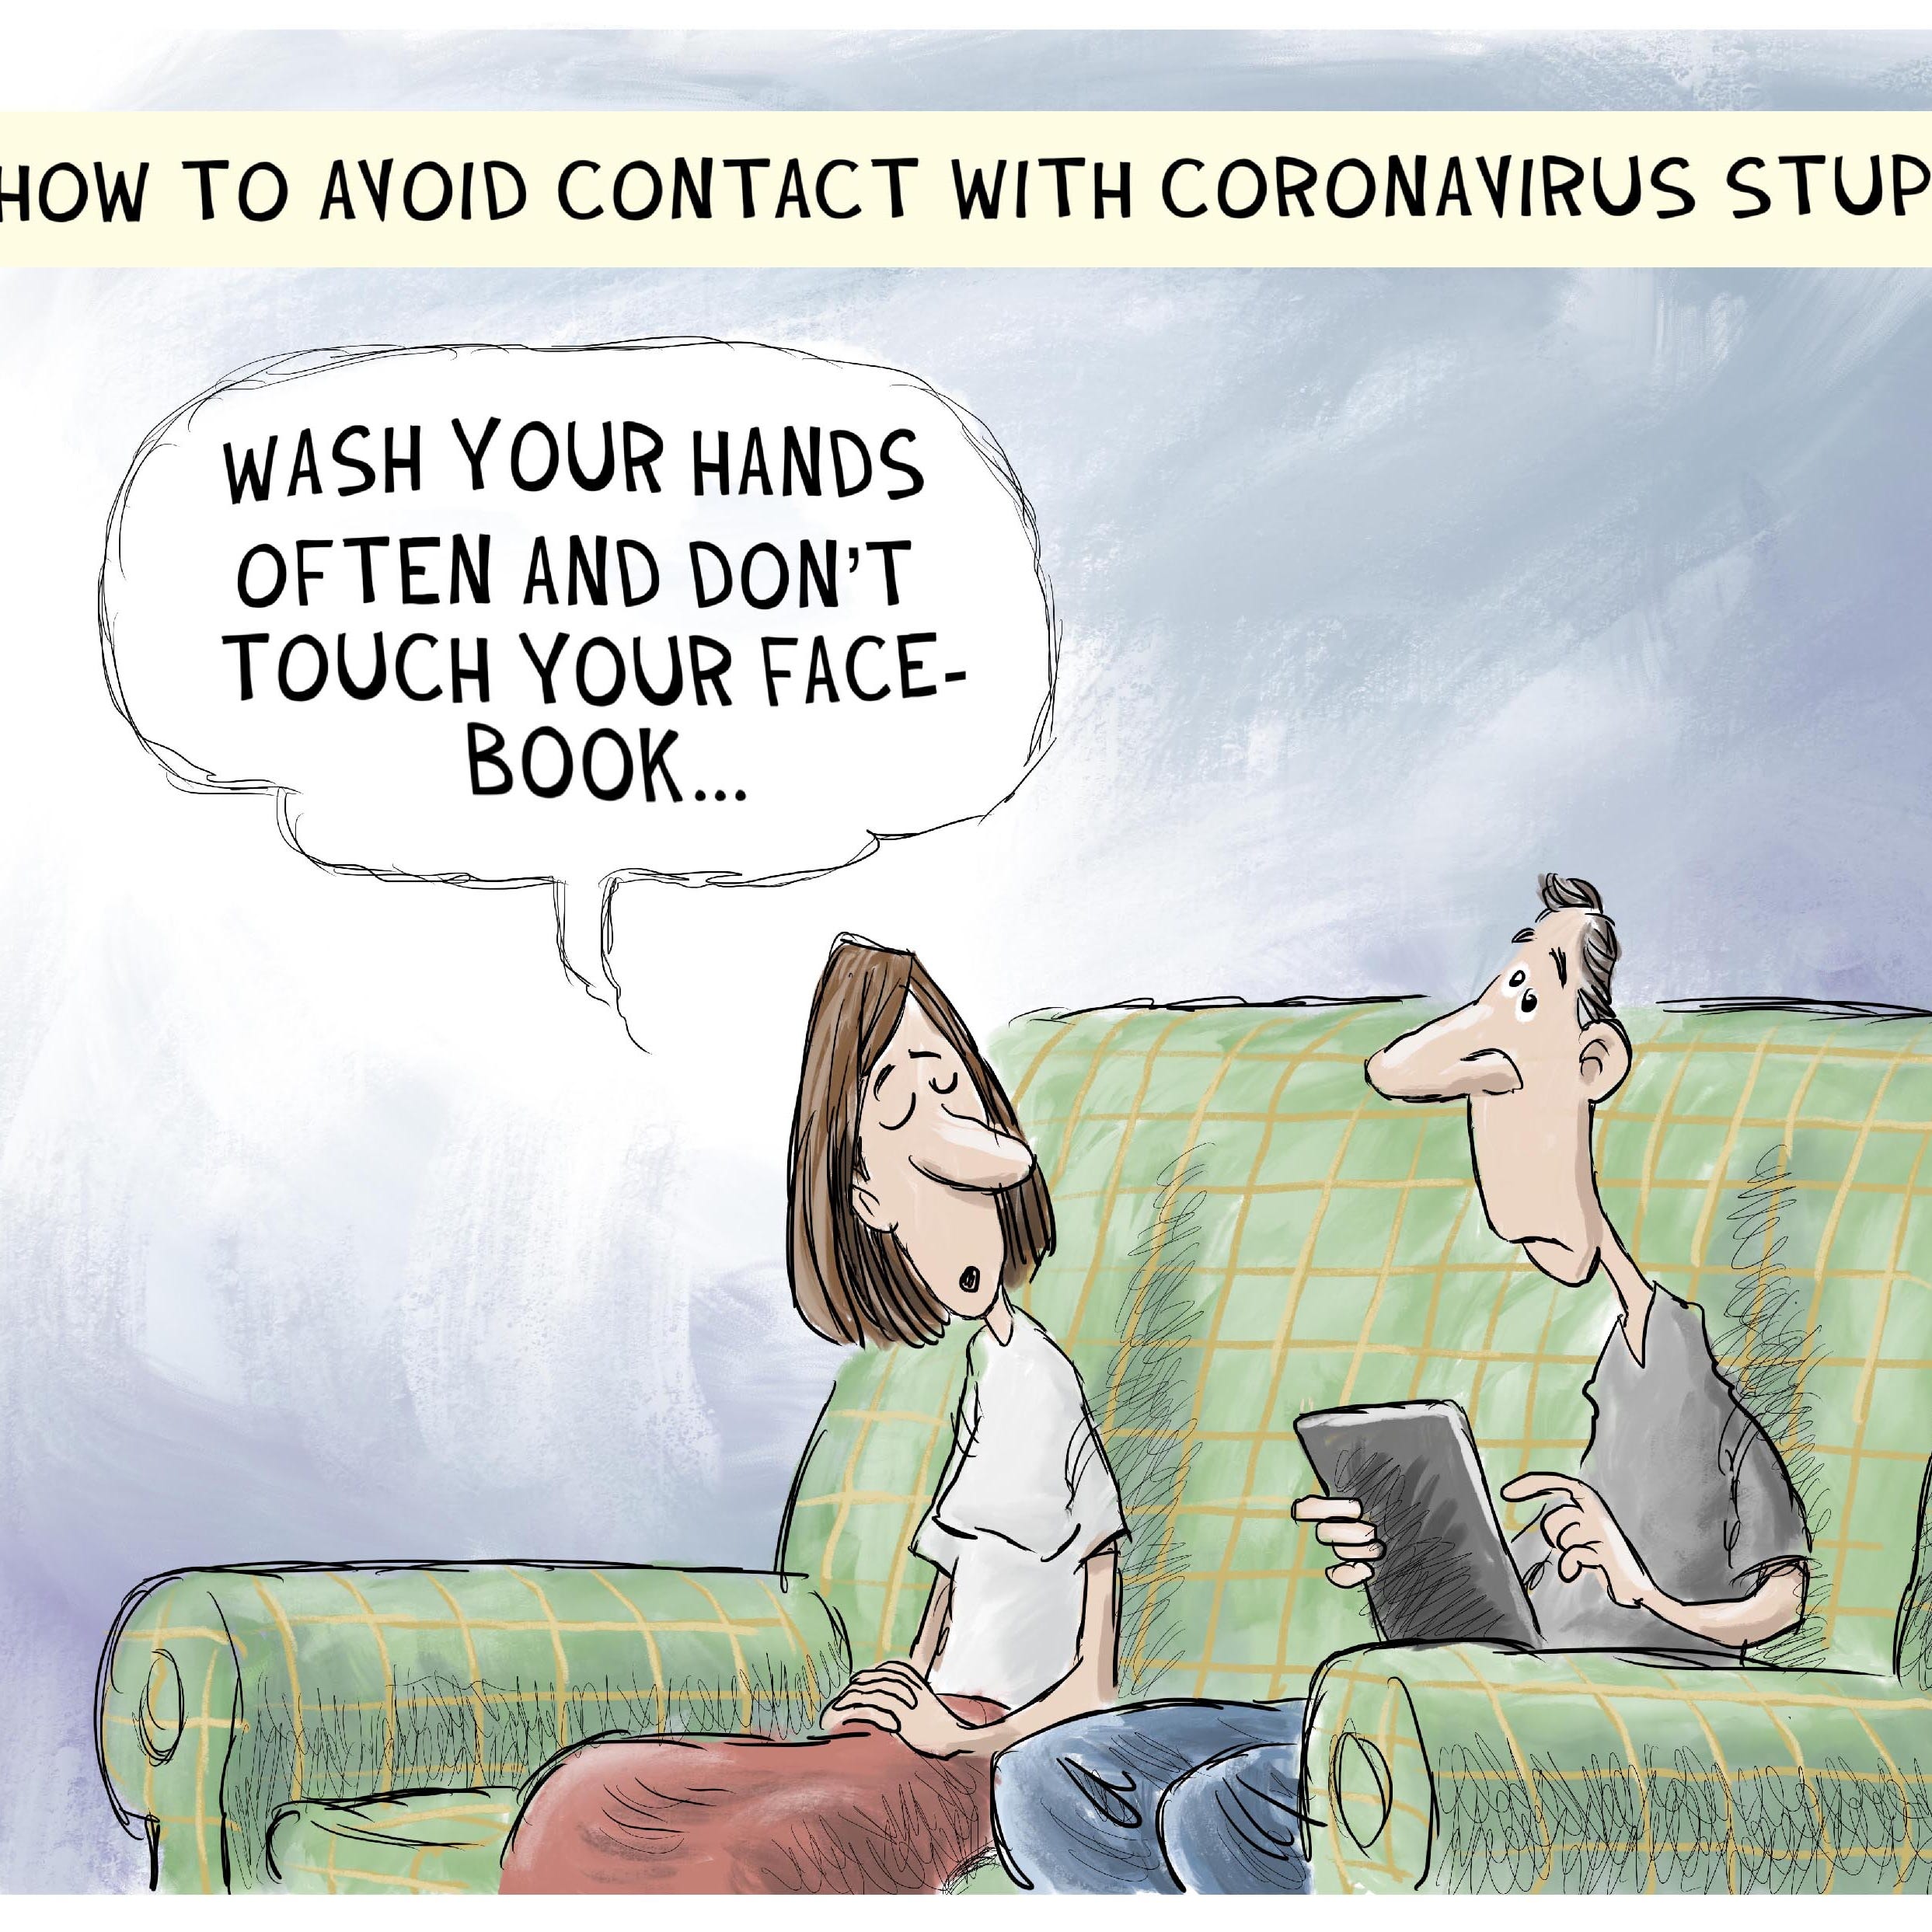 Rep Paul Gosar Tweet On Coronavirus Inspires New Meme